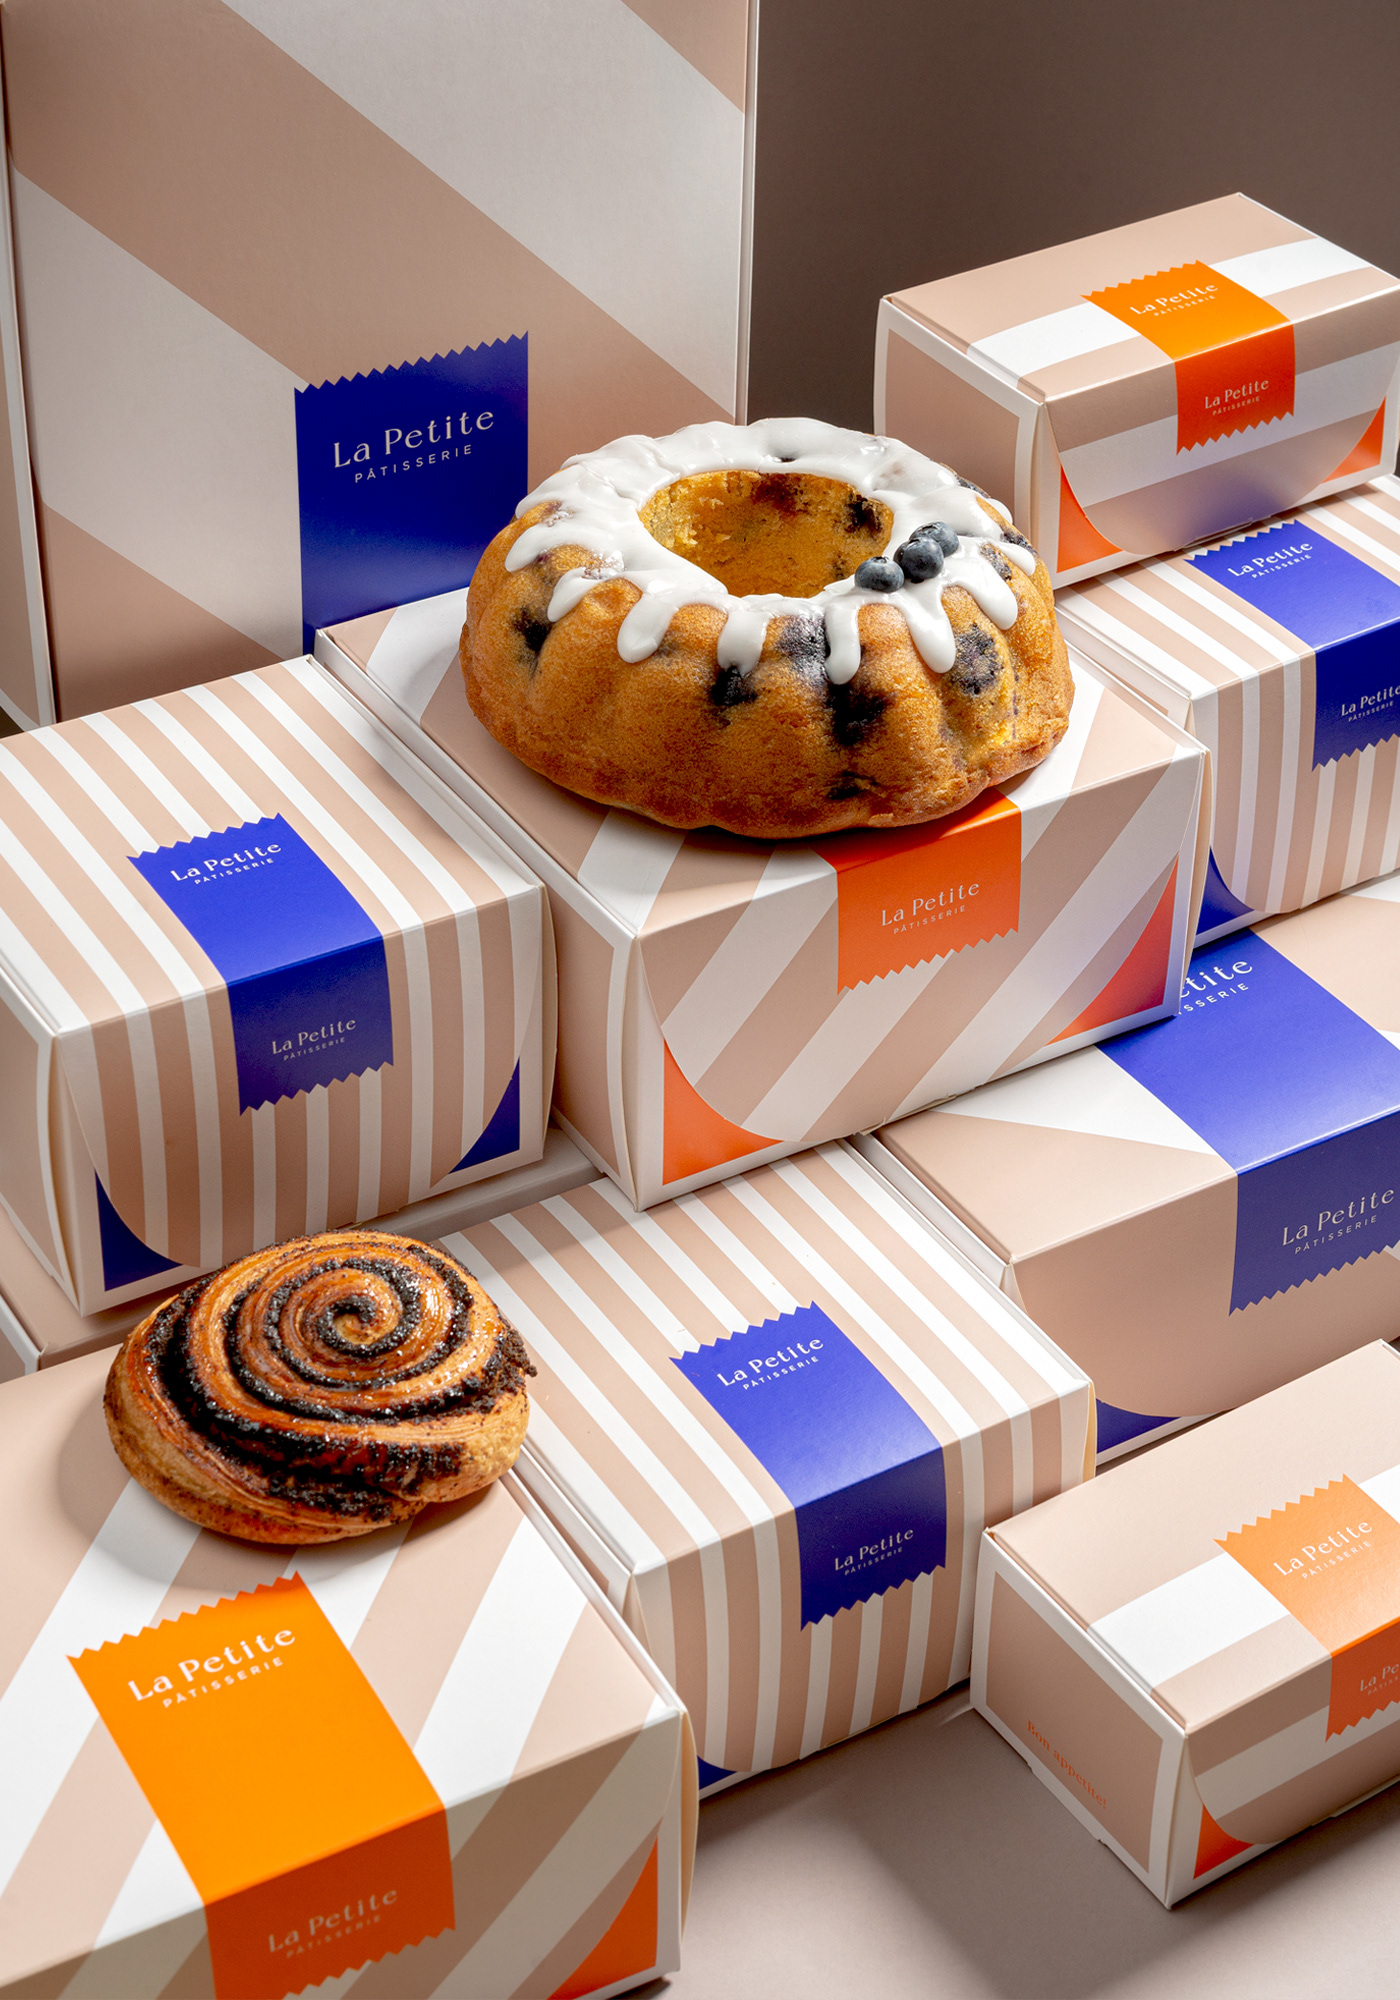 bakery bakery branding identity Patisserie visual identity bakery logo Bread packaging cake box Packaging award winning